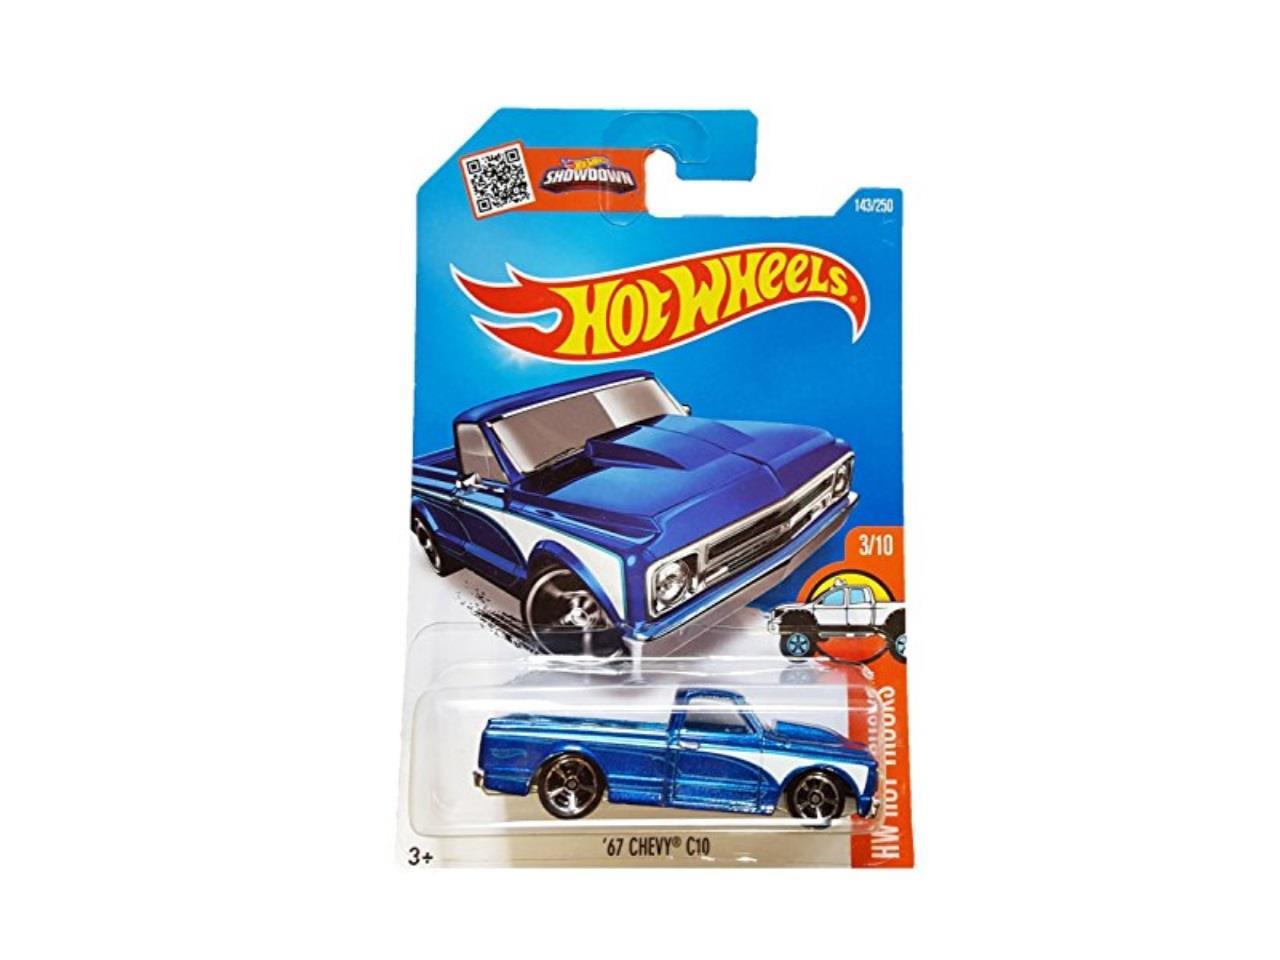 #143/250 2016 Blau Hot Wheels - HW Hot Trucks Serie 3/10 '67 CHEVY C10 